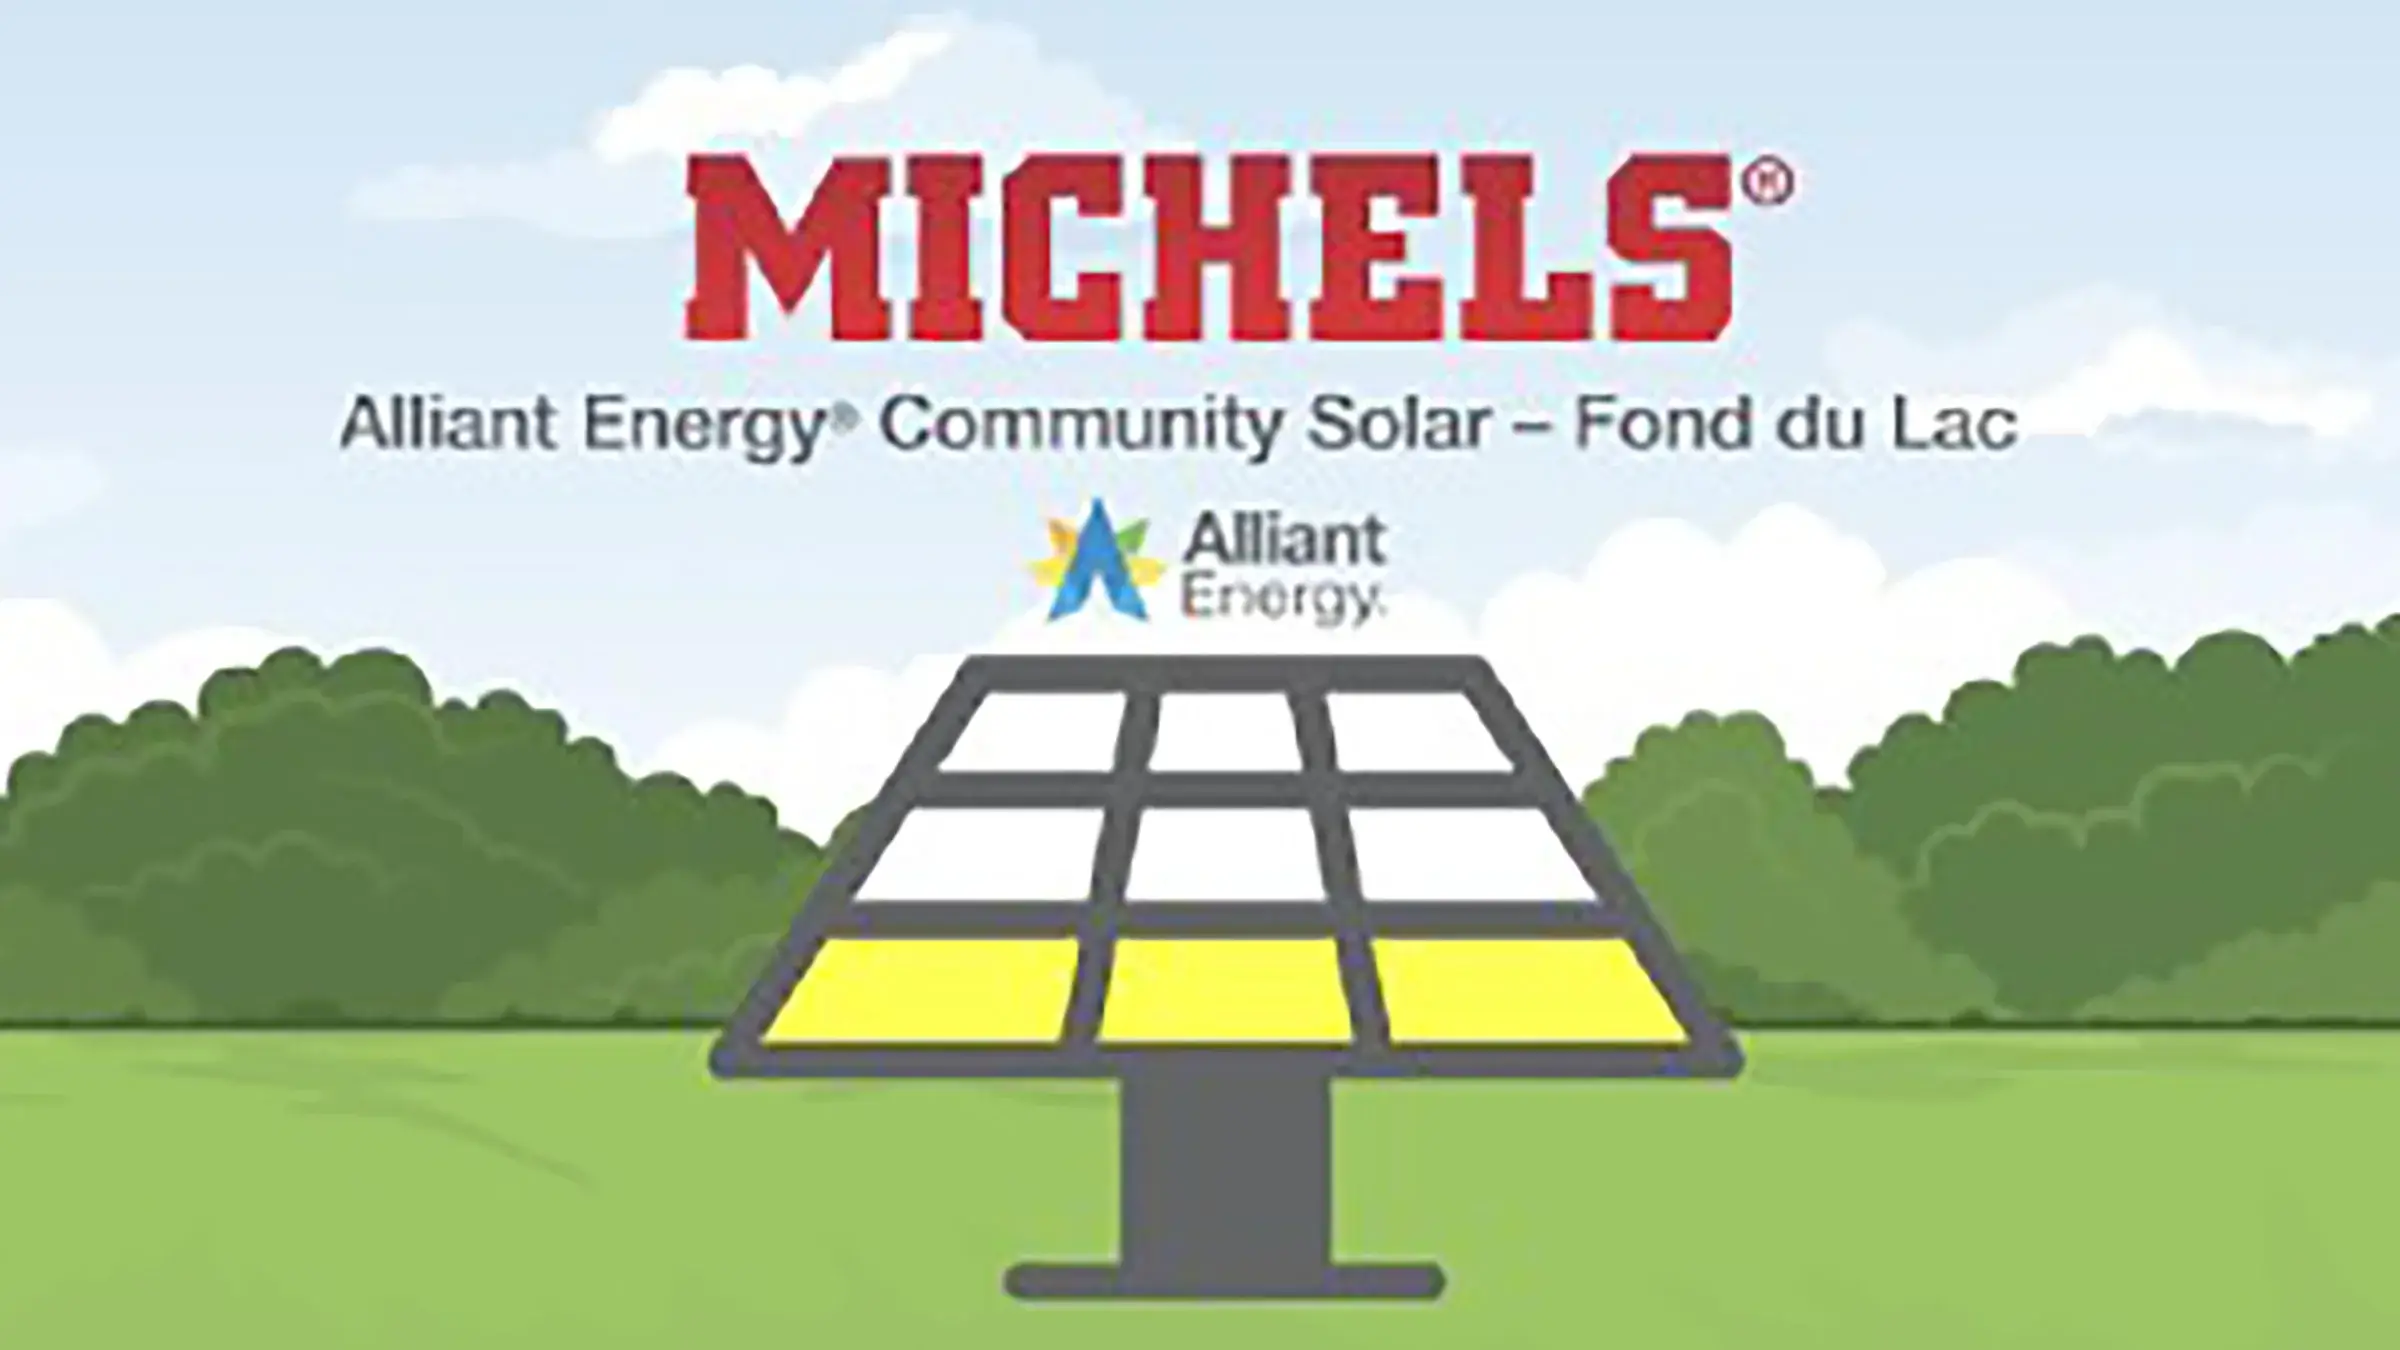 Michels - Alliant Energy partnership logo